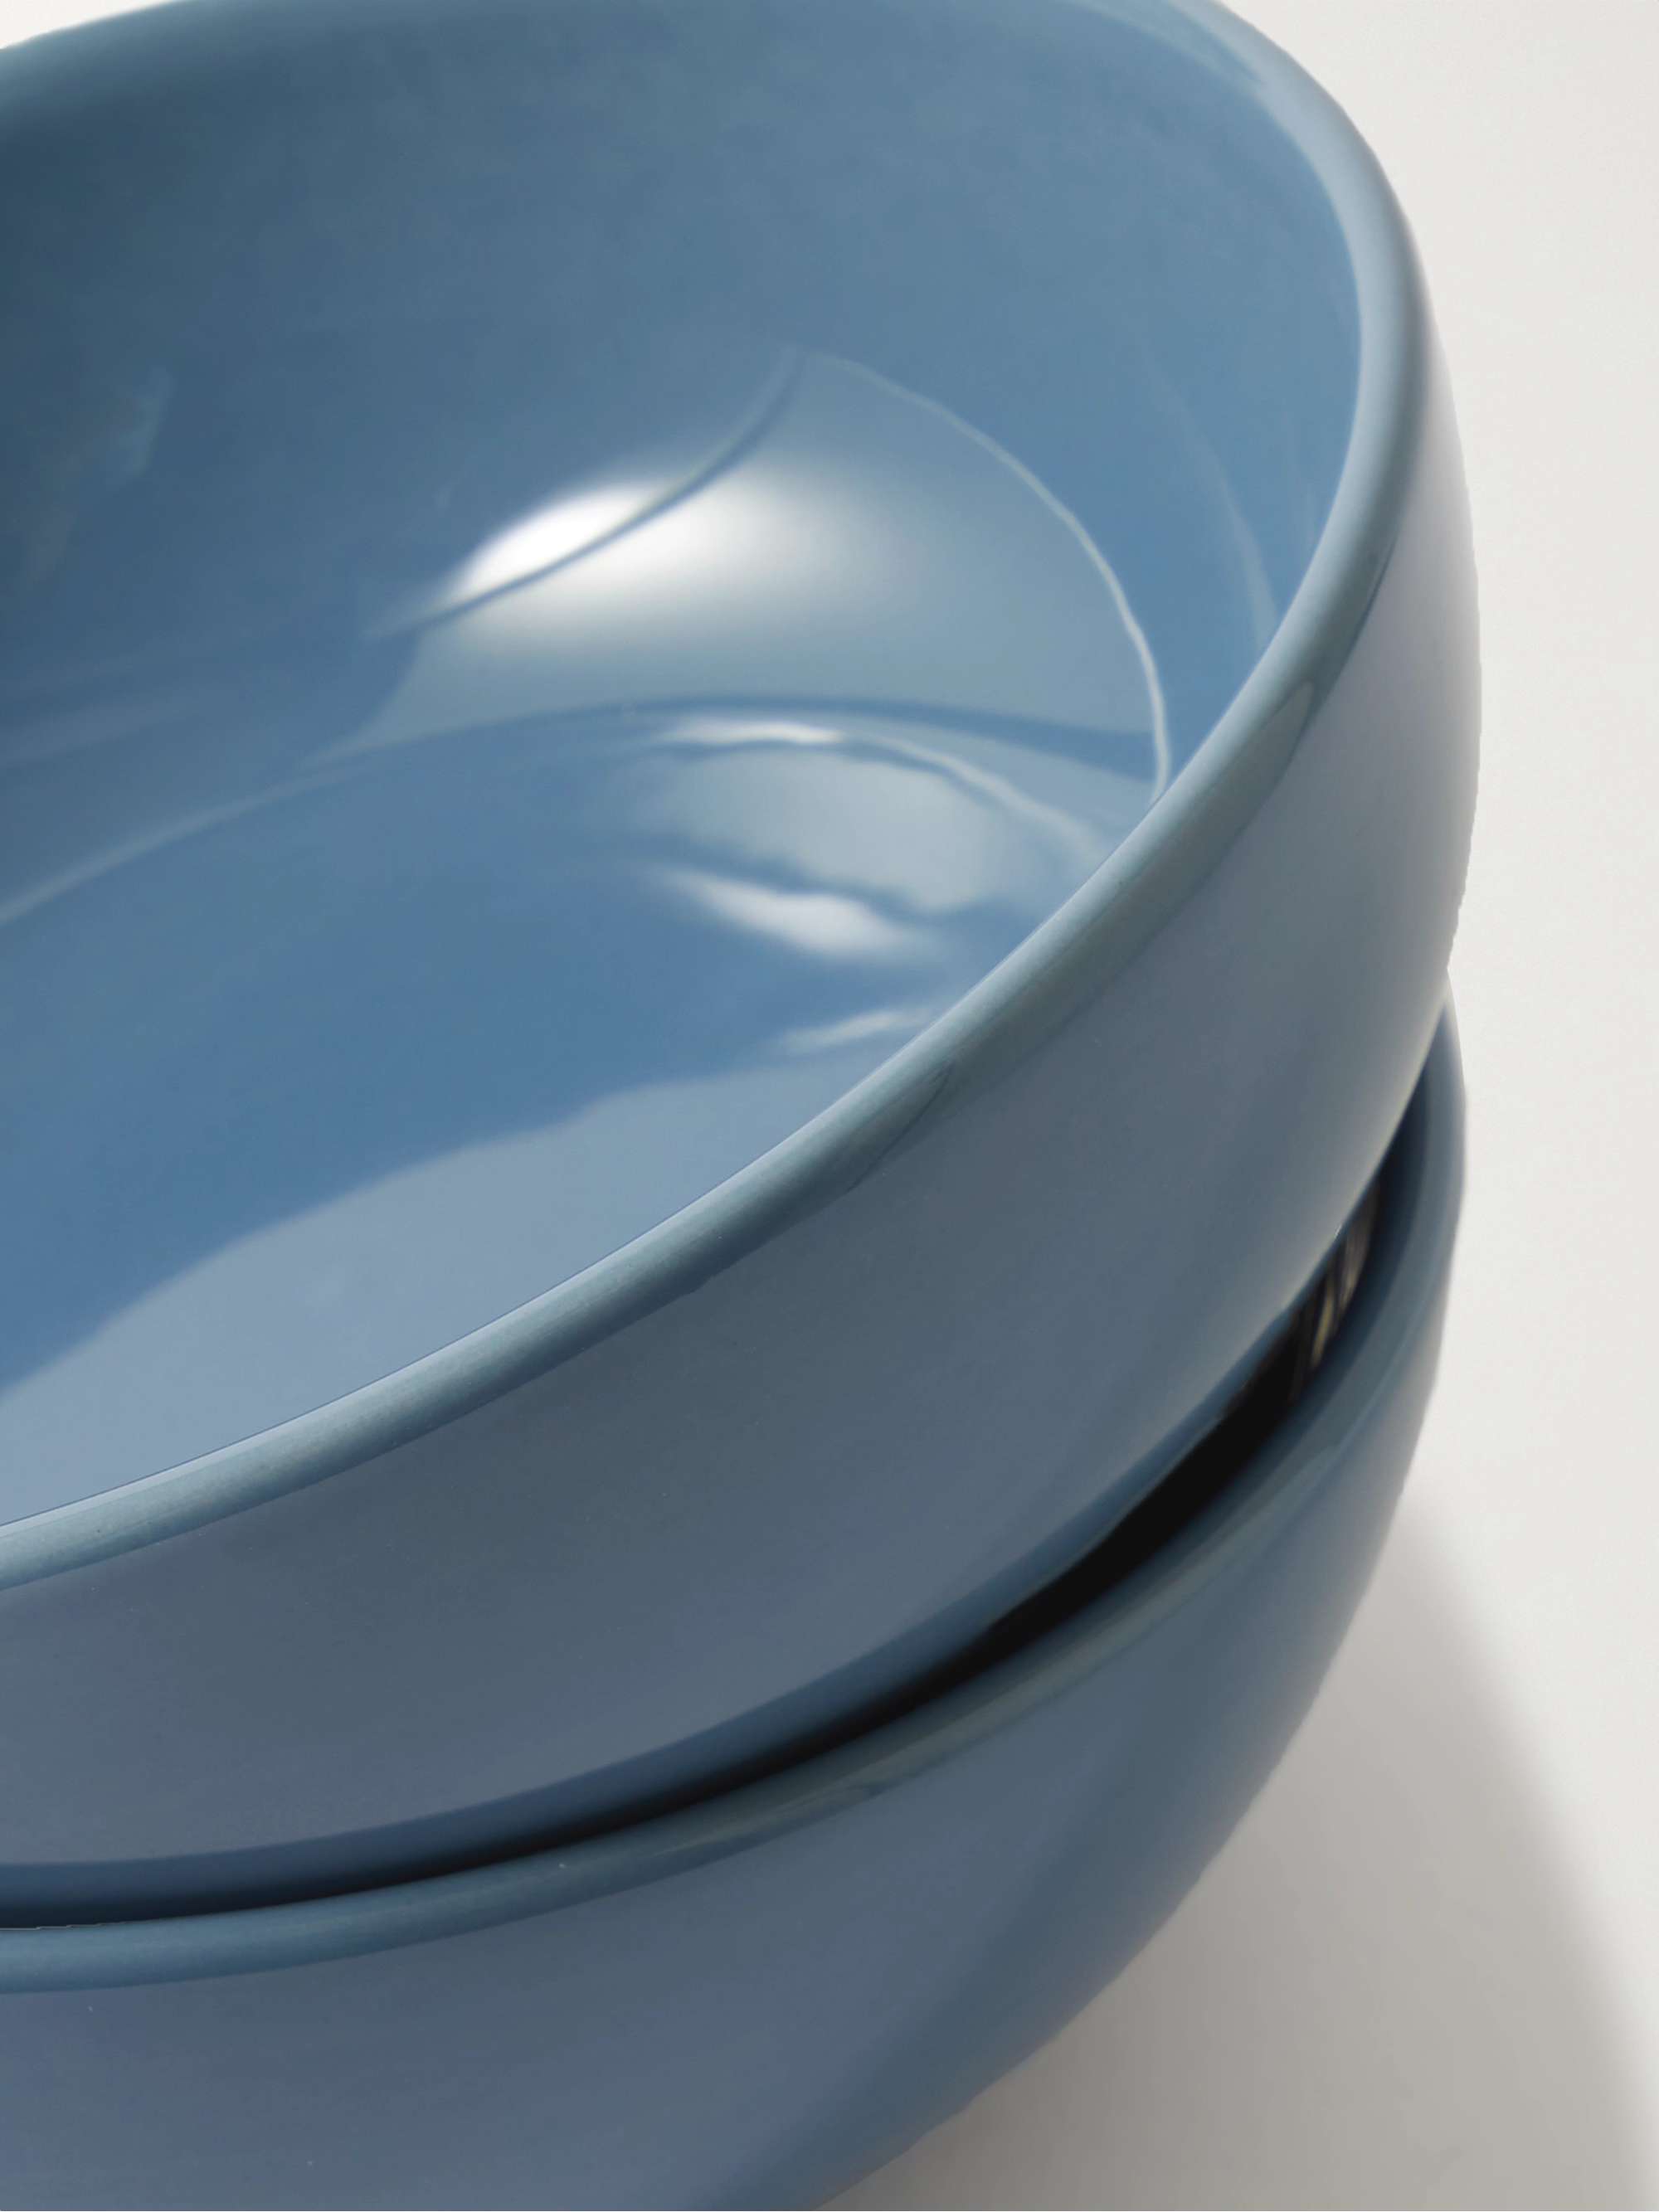 R+D.LAB Set of Two Large Bilancia Glazed Ceramic Bowls